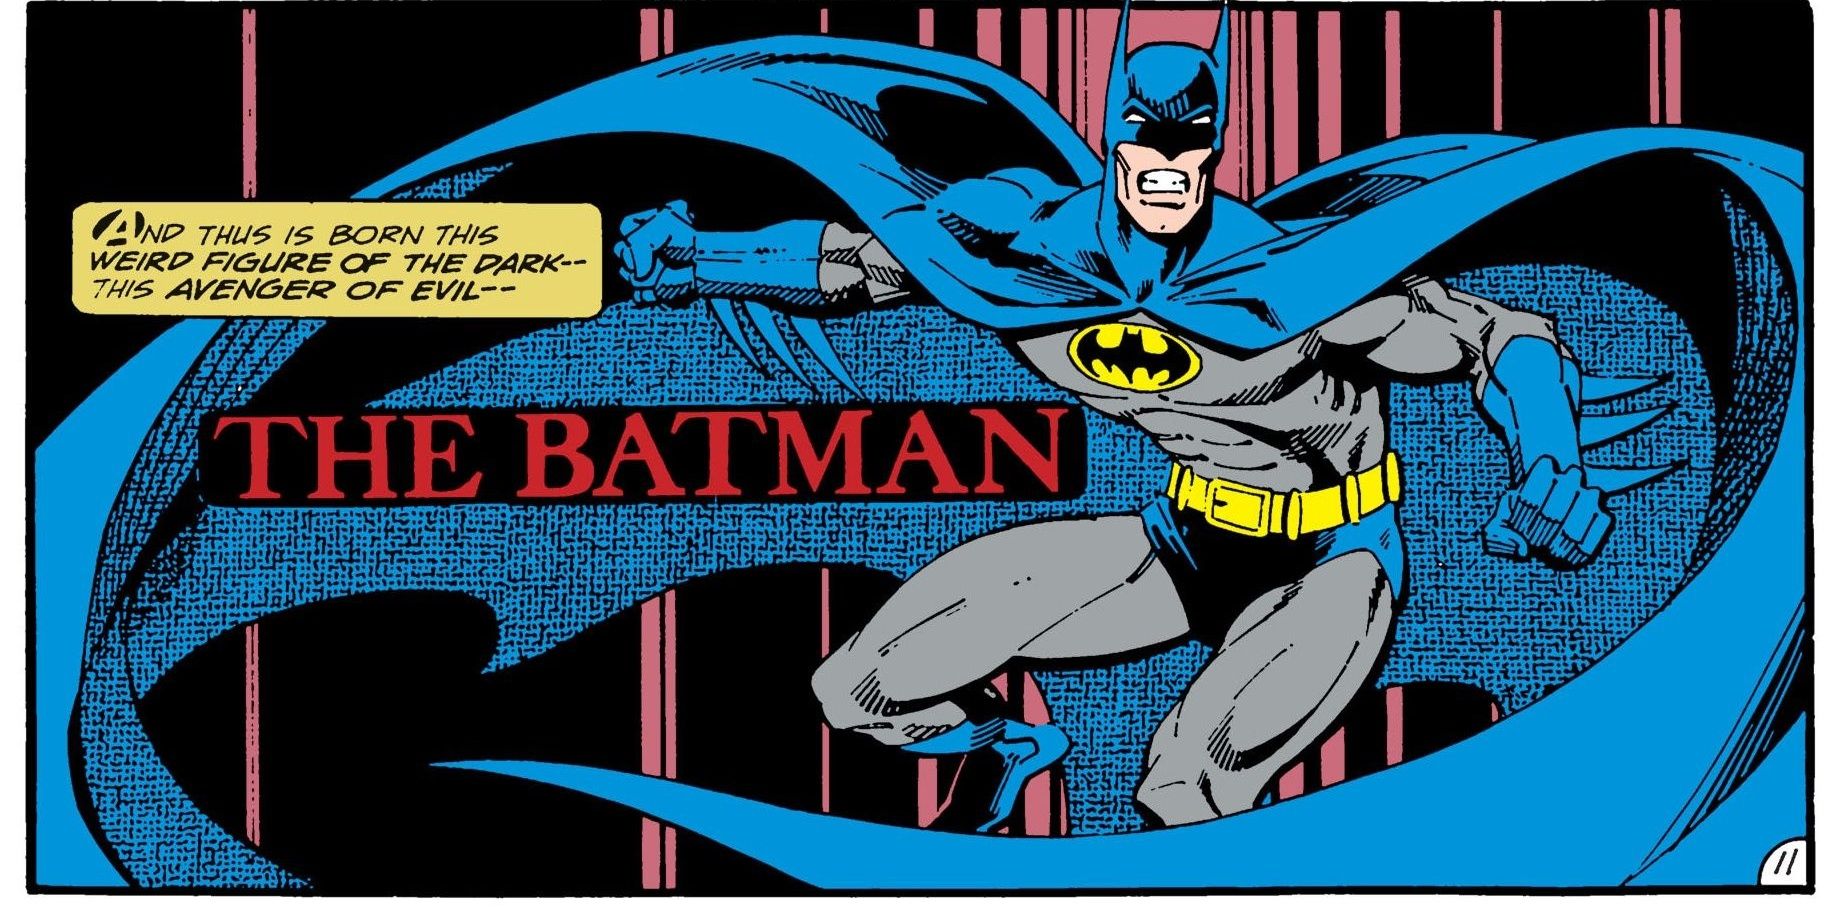 Batman Comic by Englehart and Rogers